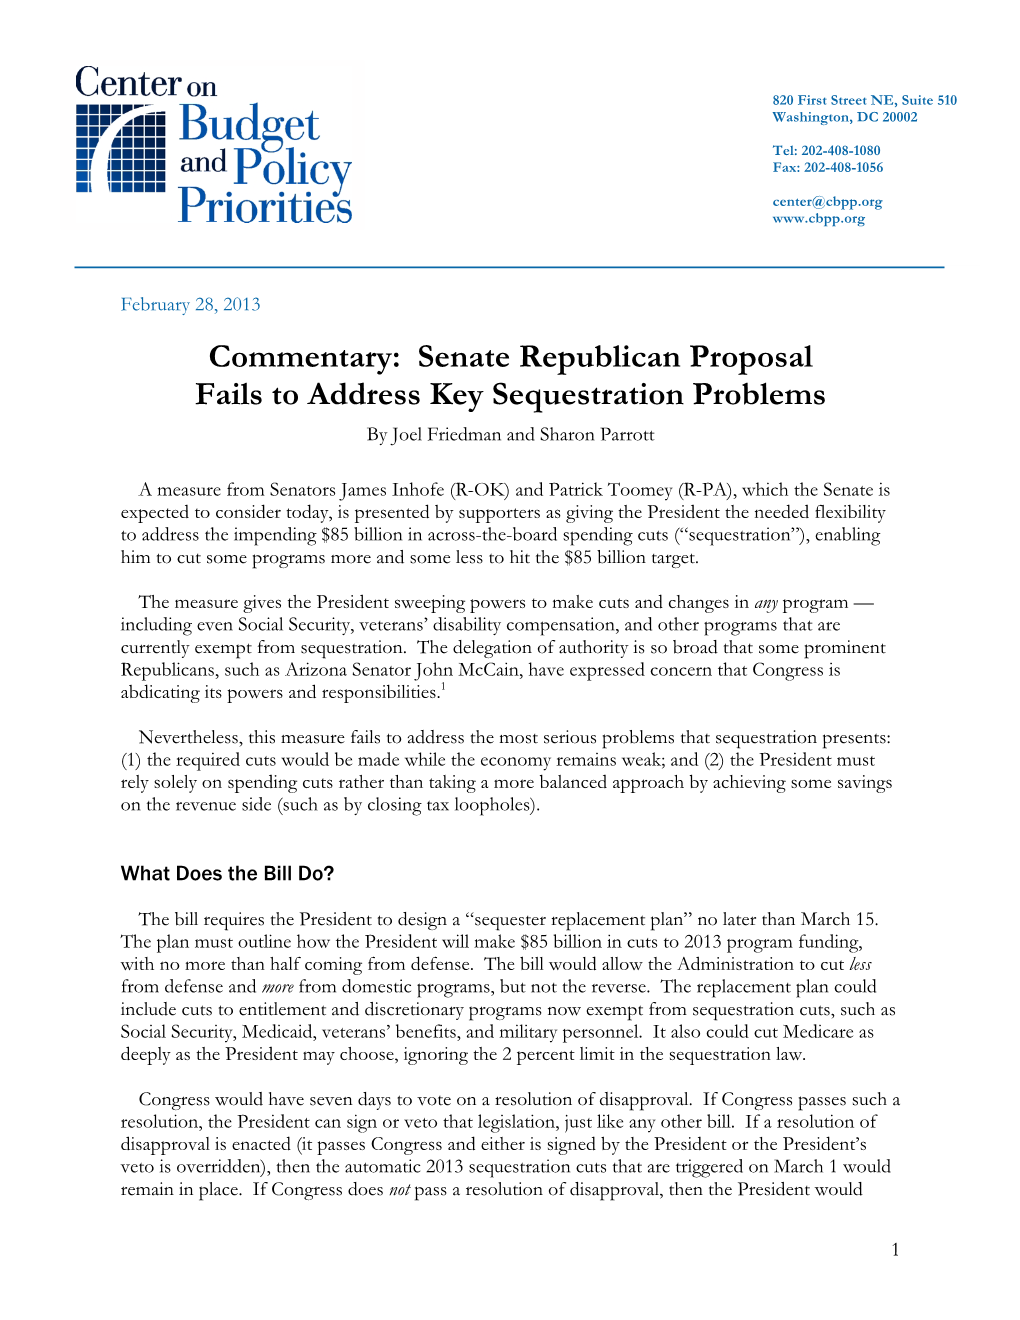 Senate Republican Proposal Fails to Address Key Sequestration Problems by Joel Friedman and Sharon Parrott